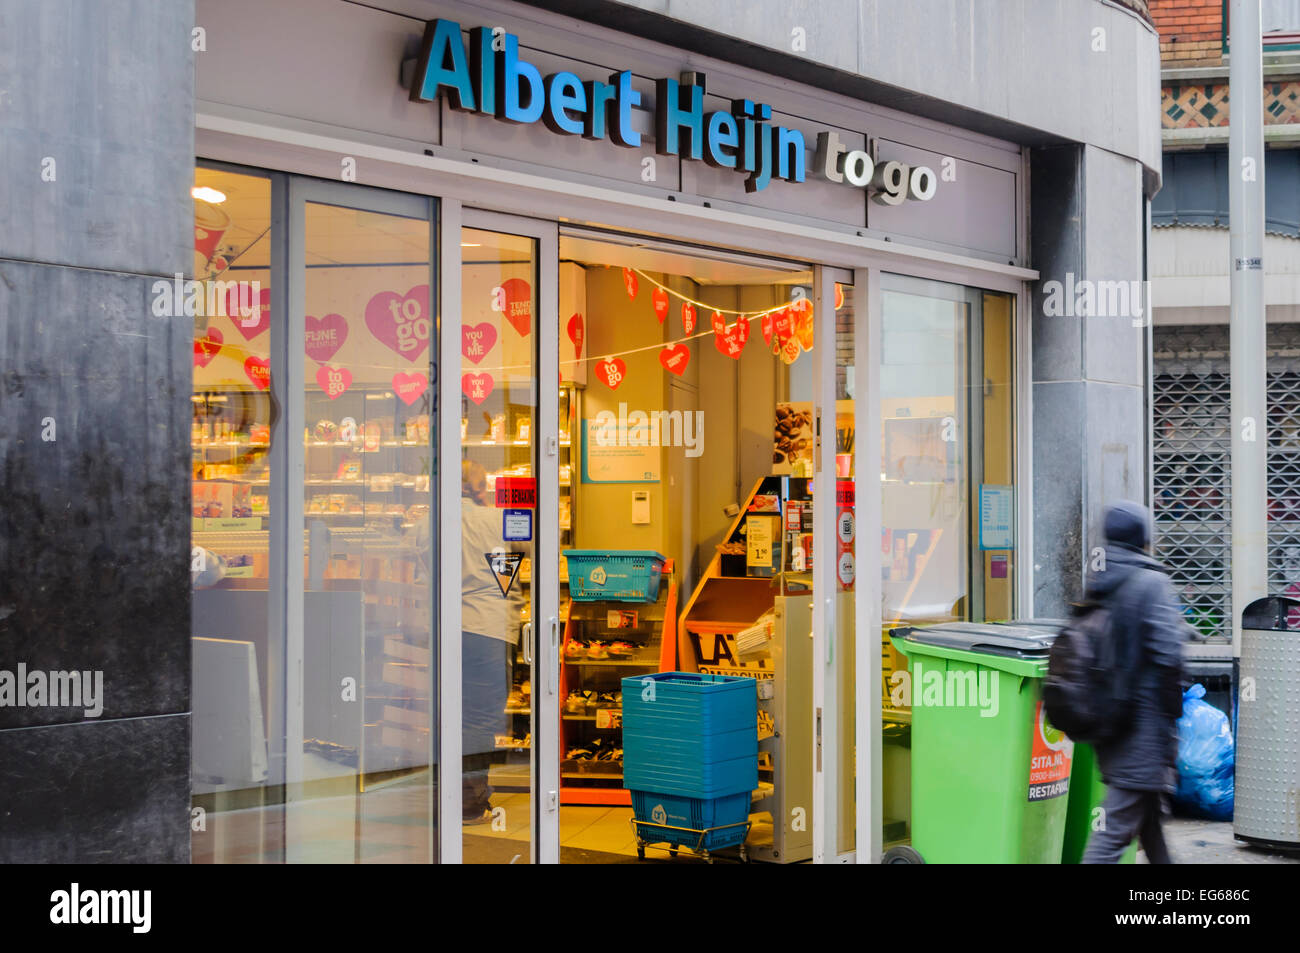 Albert Heijn To Go store, Amsterdam Stock Photo